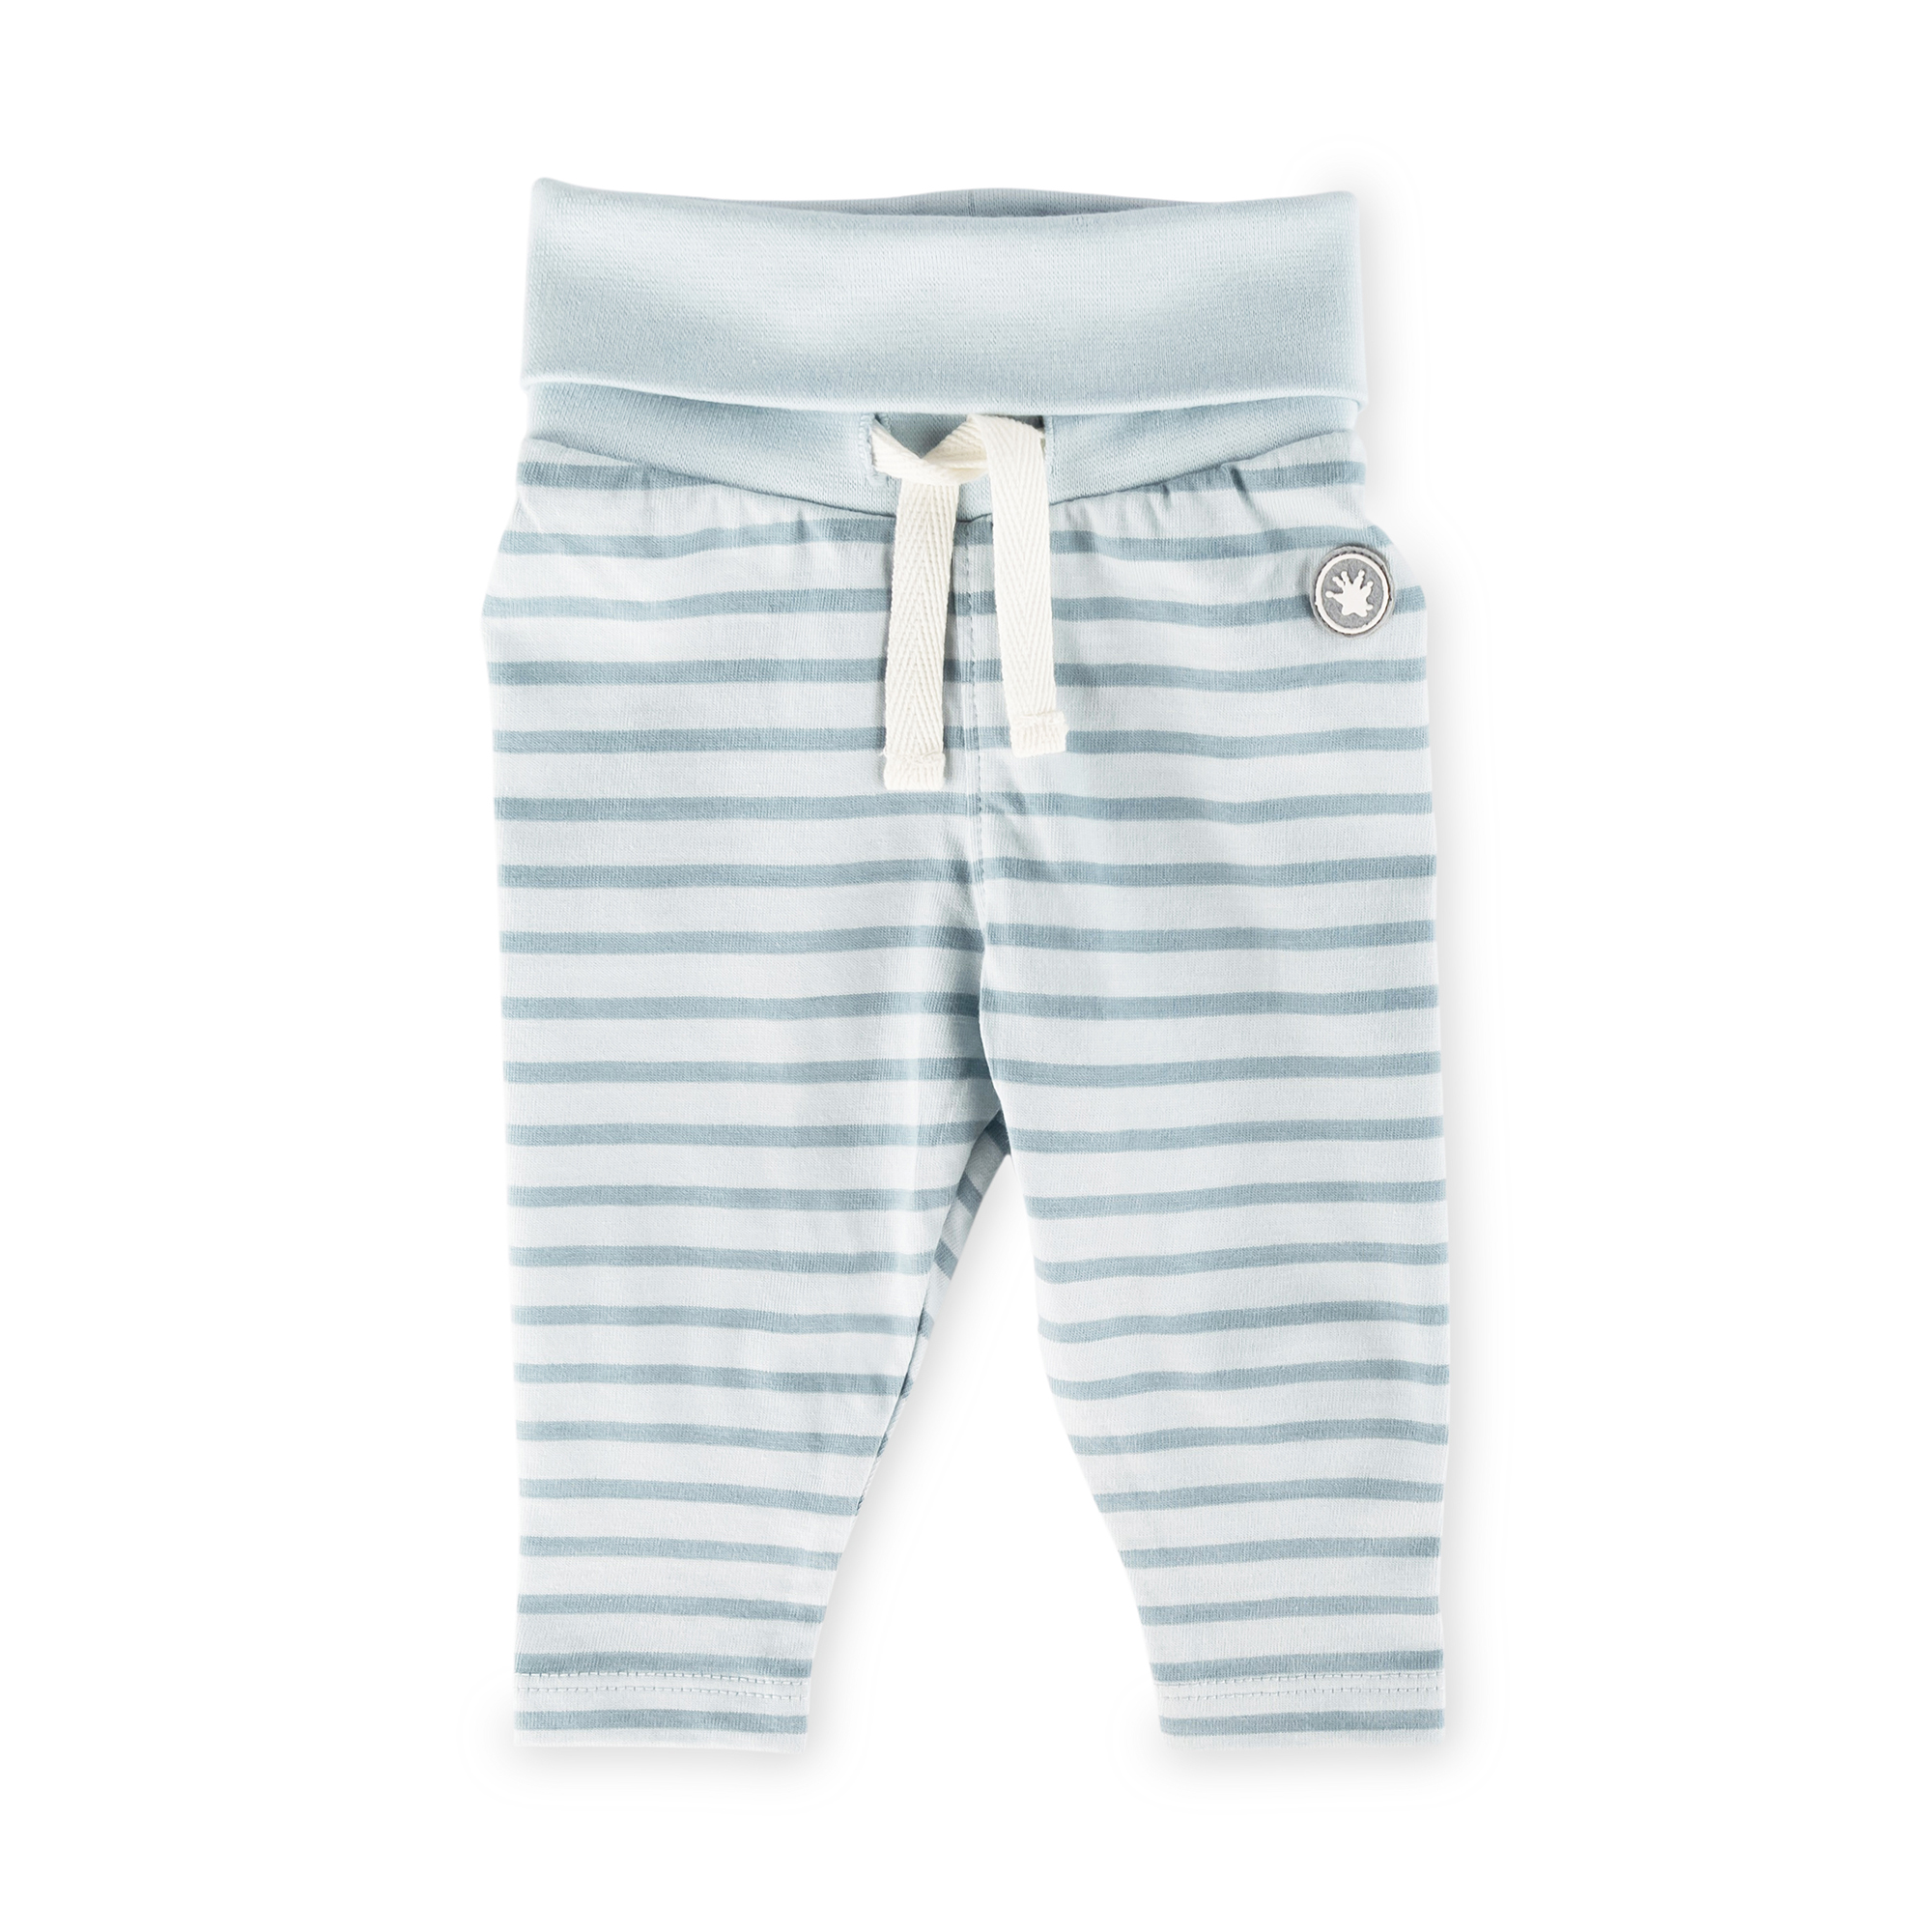 Newborn baby leggings blue striped